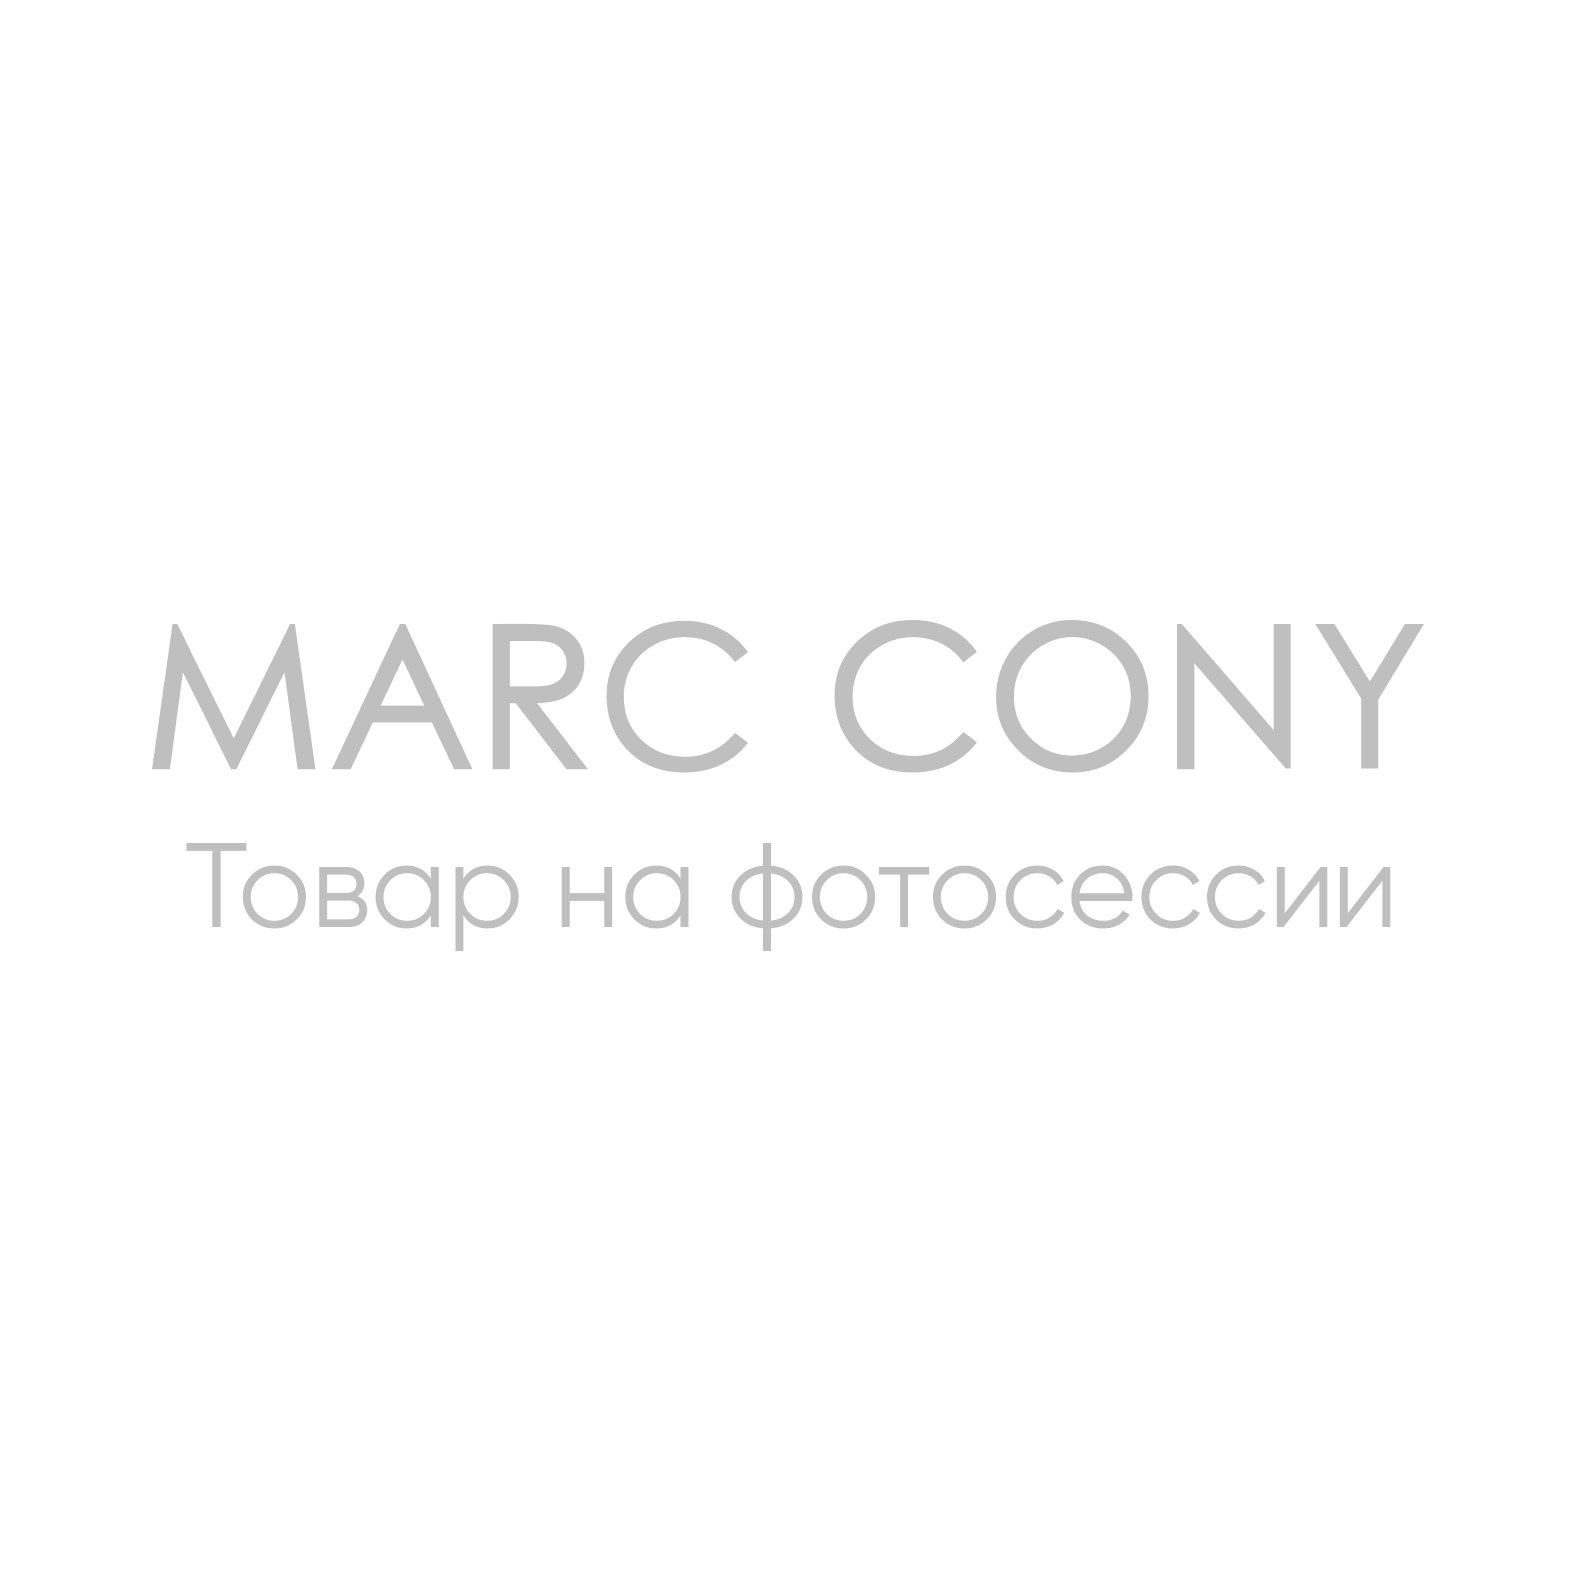 Кеды Marc Cony